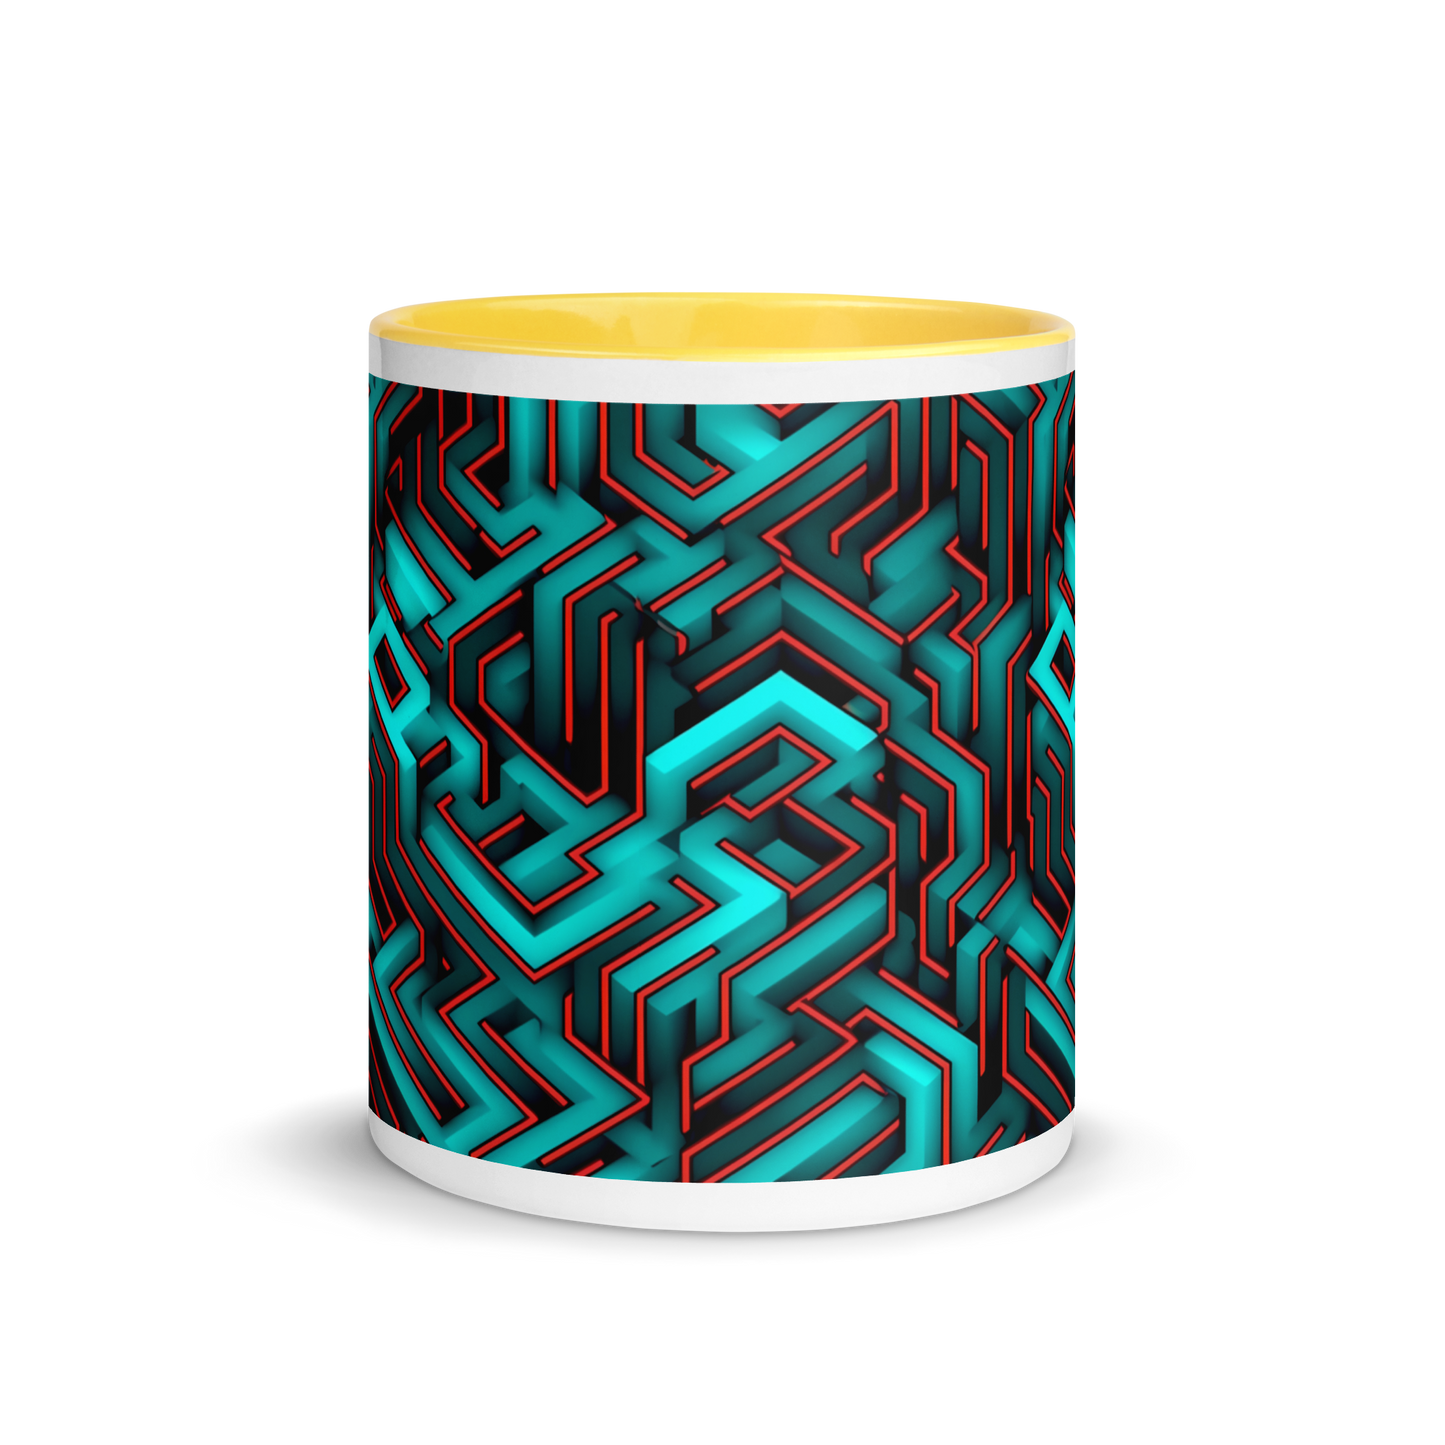 3D Maze Illusion | 3D Patterns | White Ceramic Mug with Color Inside - #2